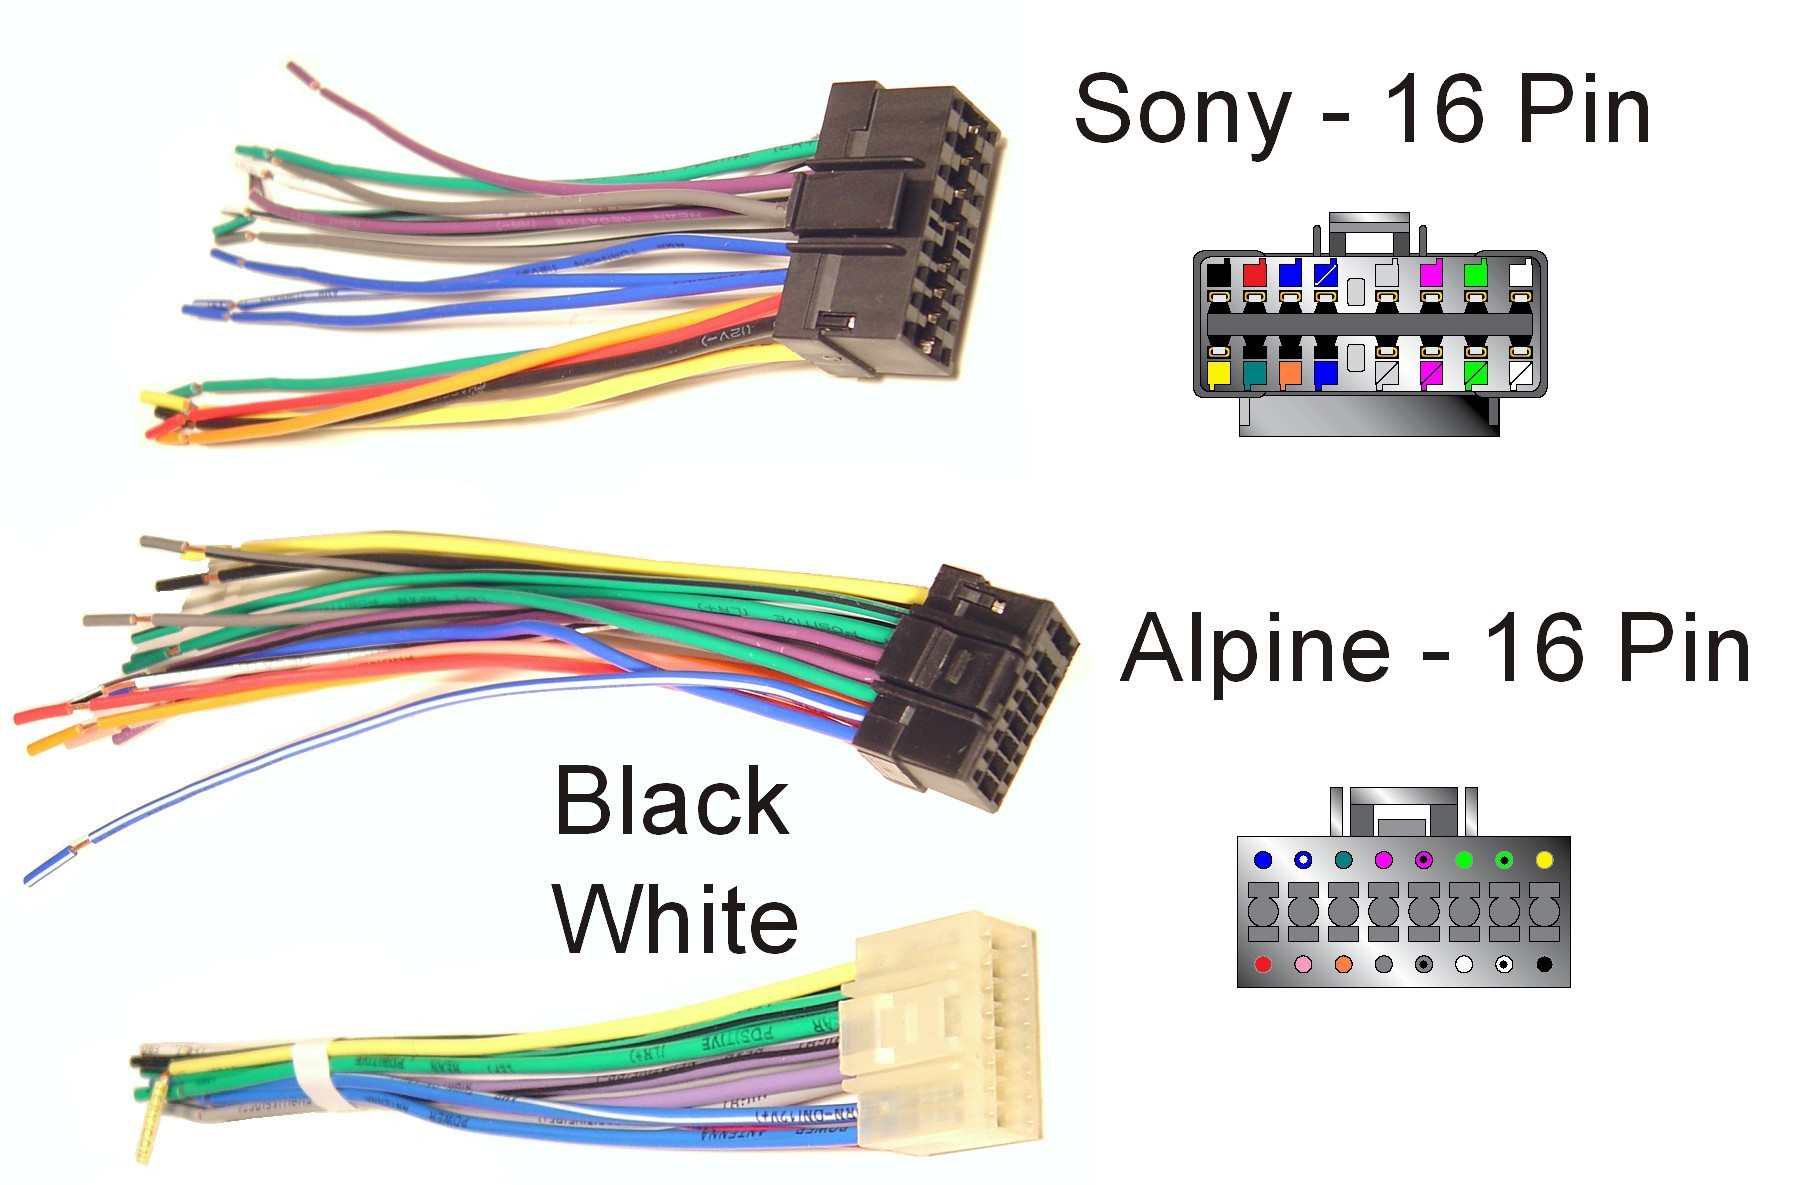 Sony Stereo Wire Diagram | Wiring Diagram - Sony Radio Wiring Diagram